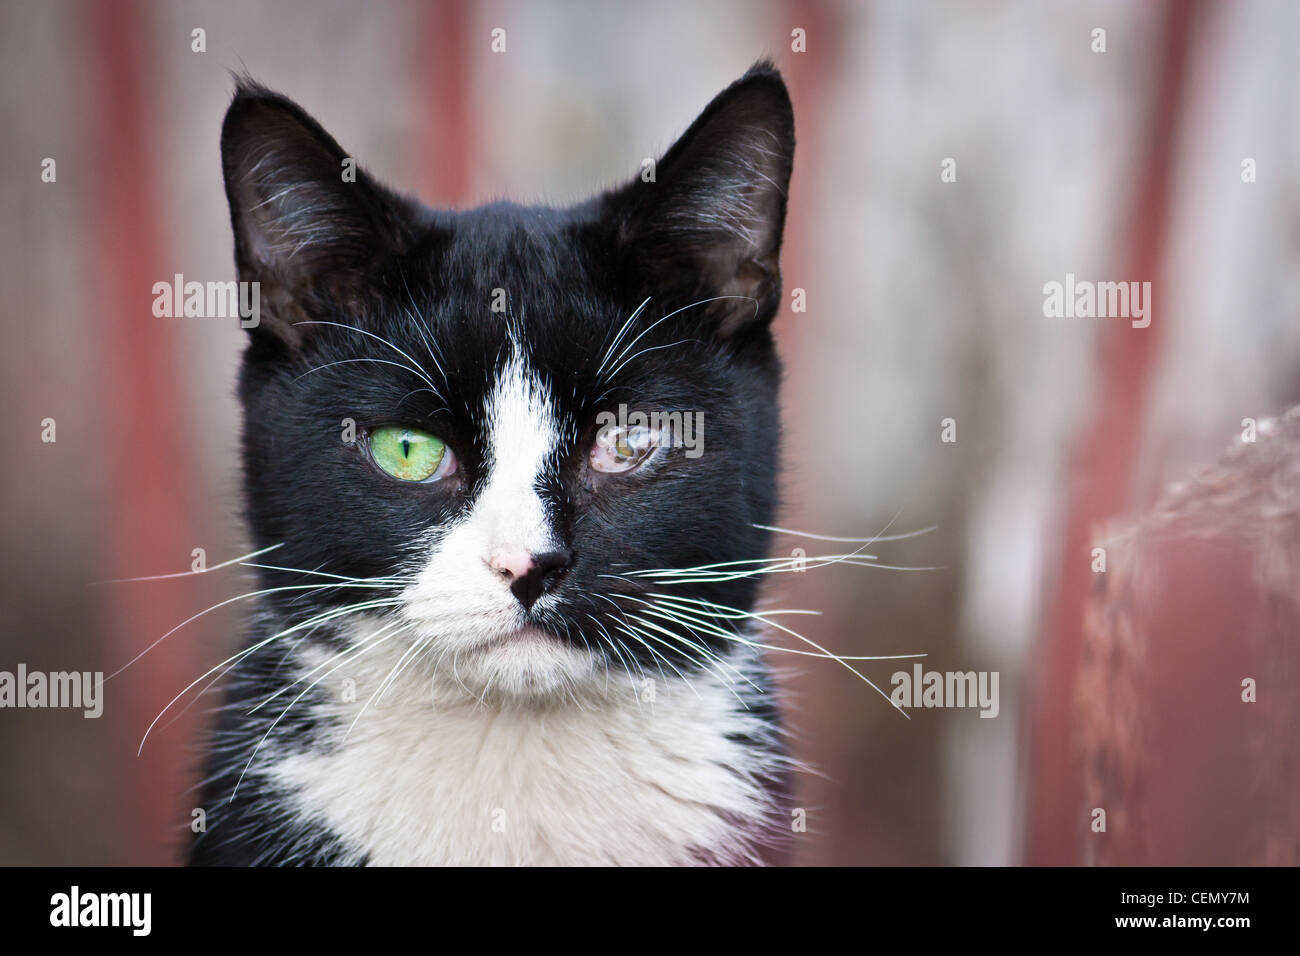 Sick cat with eye disease Stock Photo